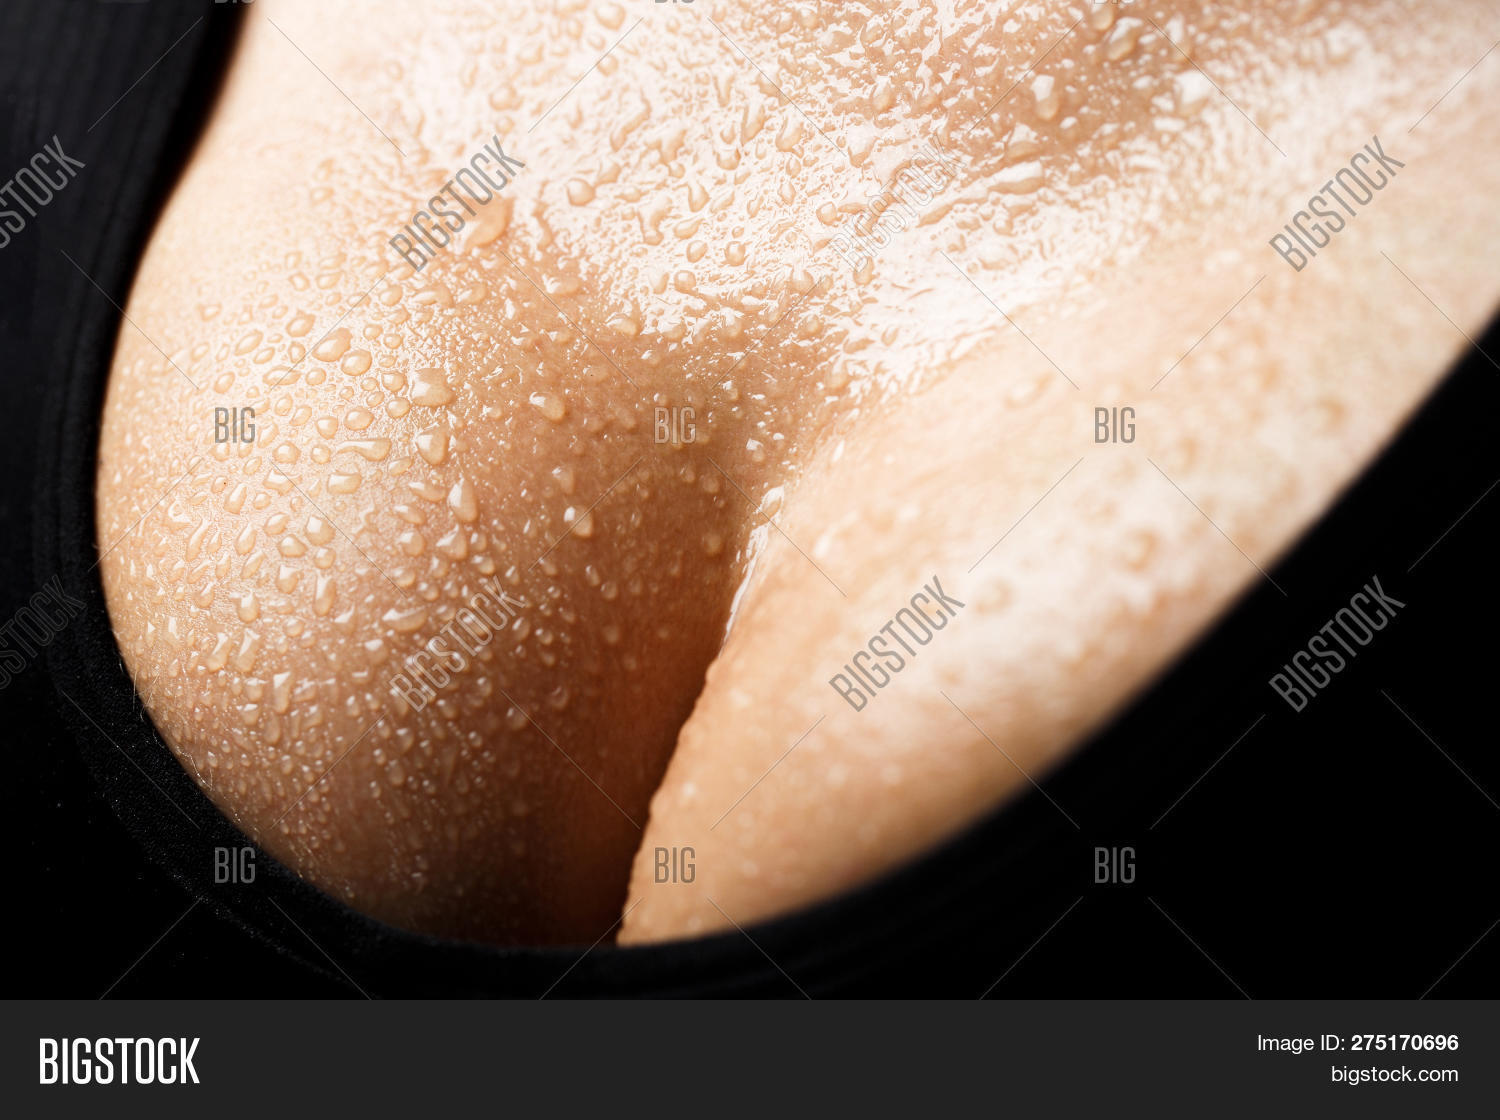 close up boobs